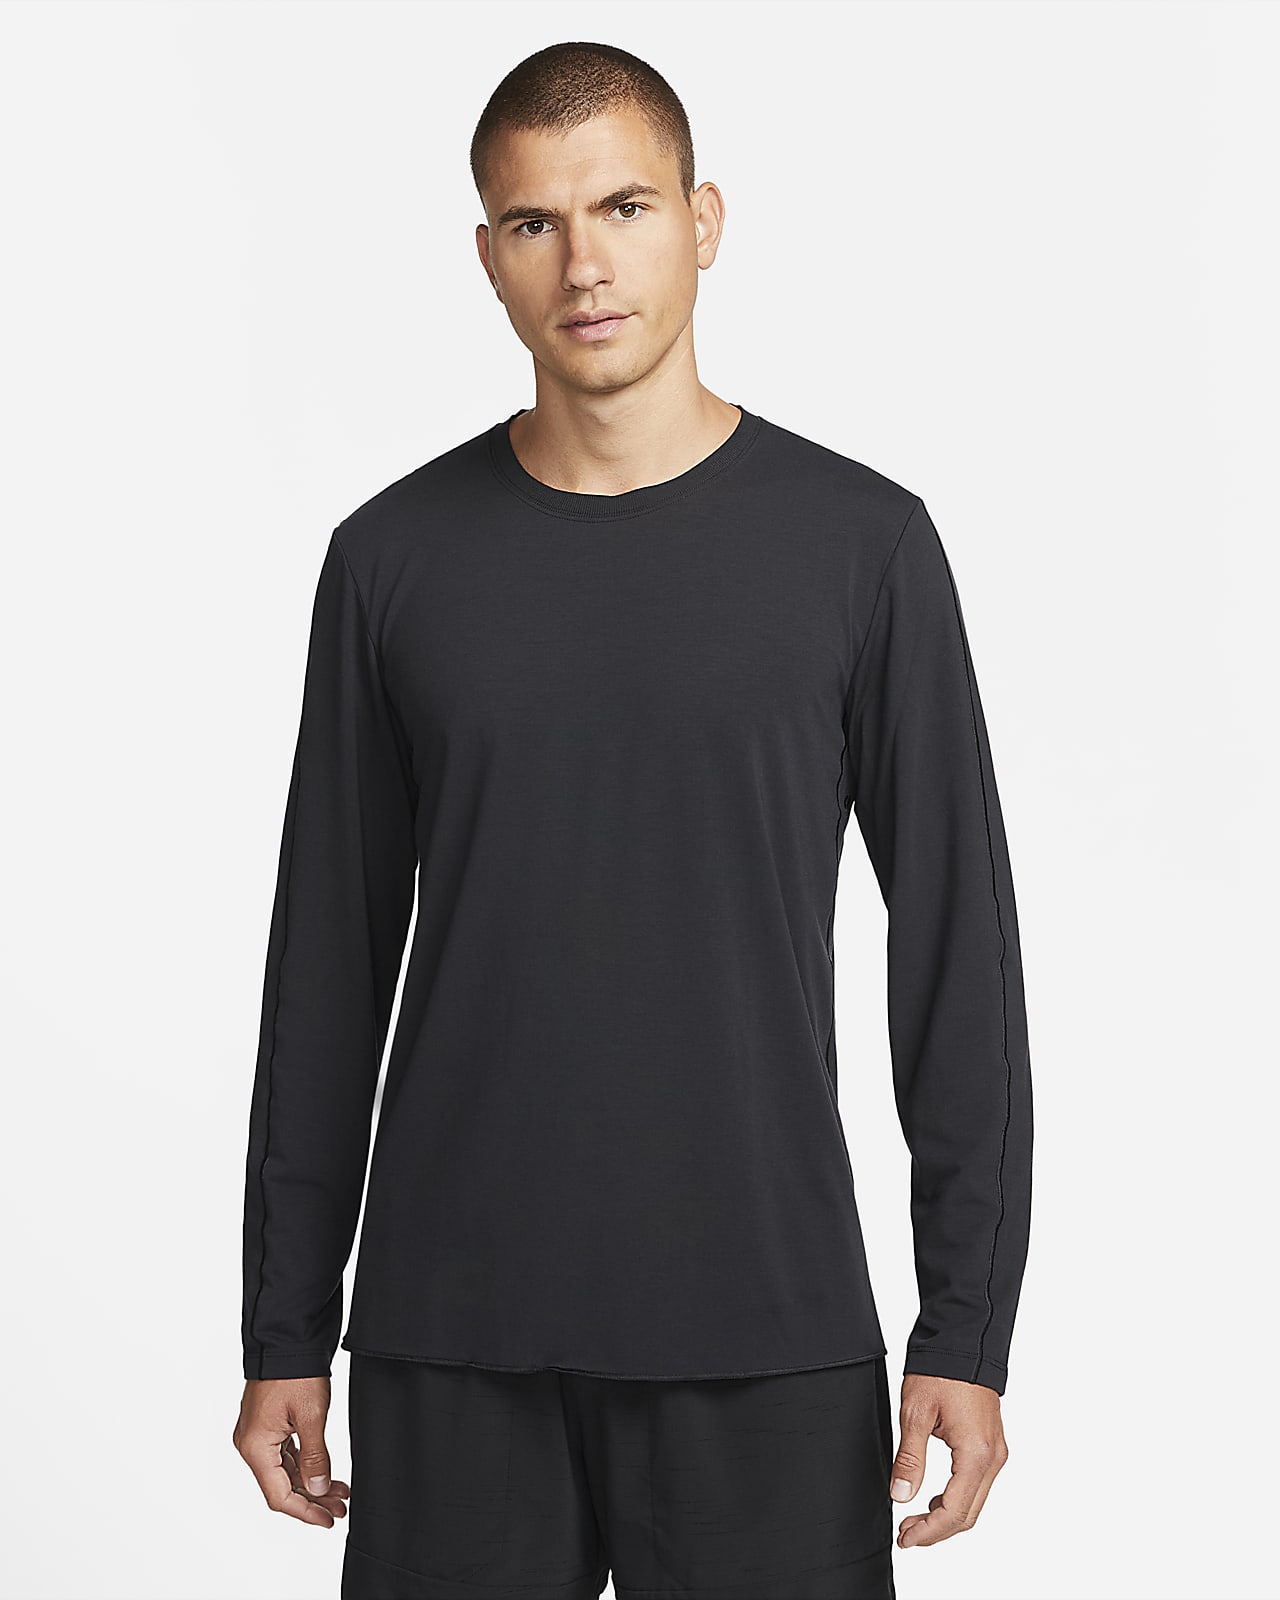 Nike Dri-FIT Yoga Men's Long-Sleeve Top.